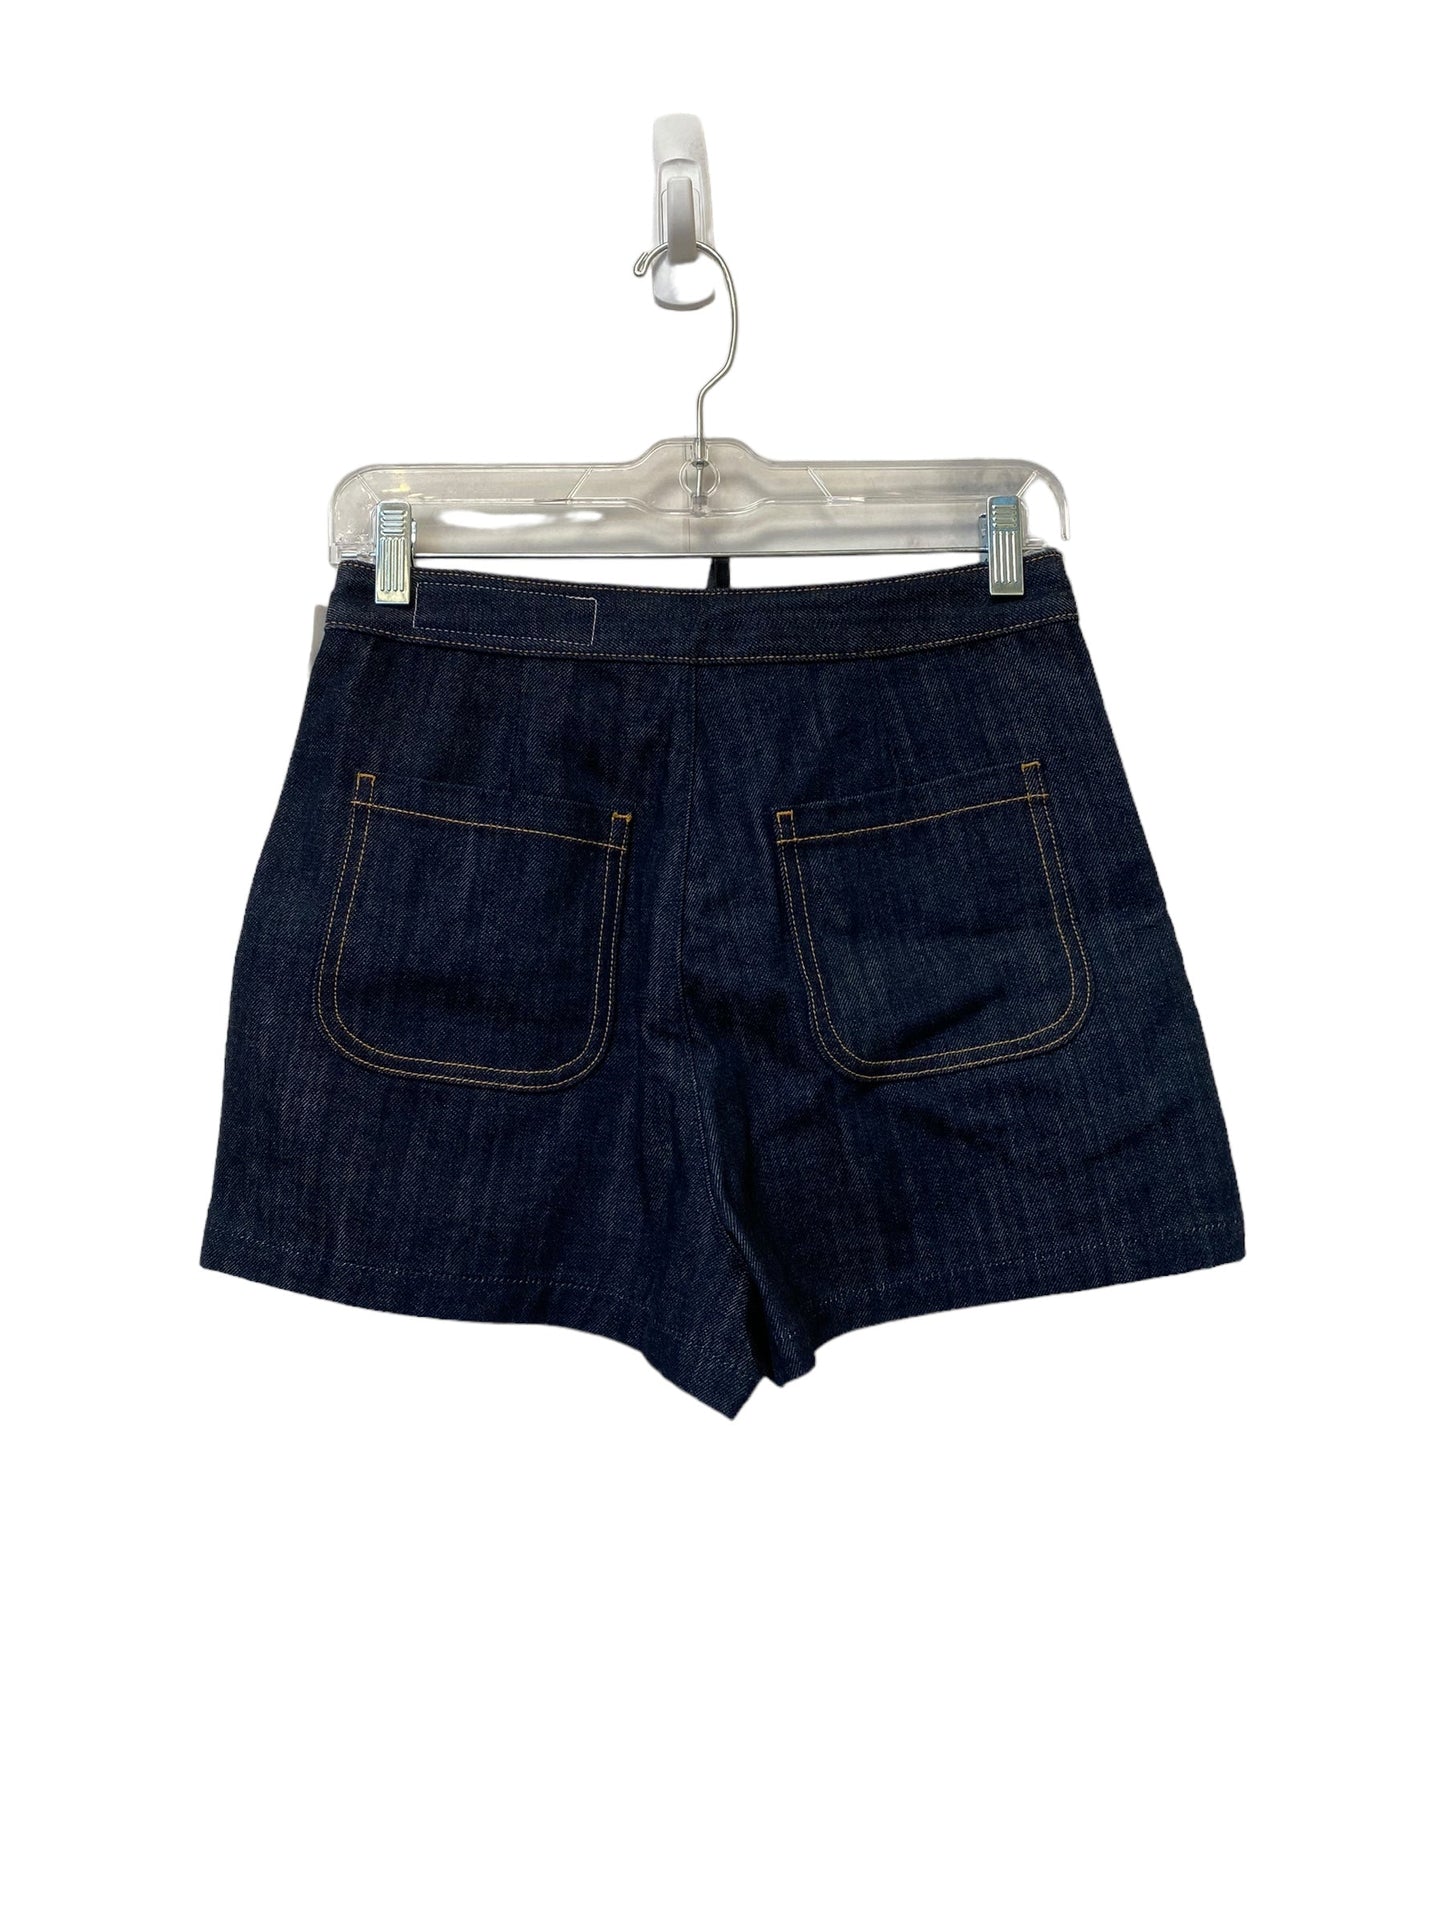 Blue Denim Shorts Rag & Bones Jeans, Size 26